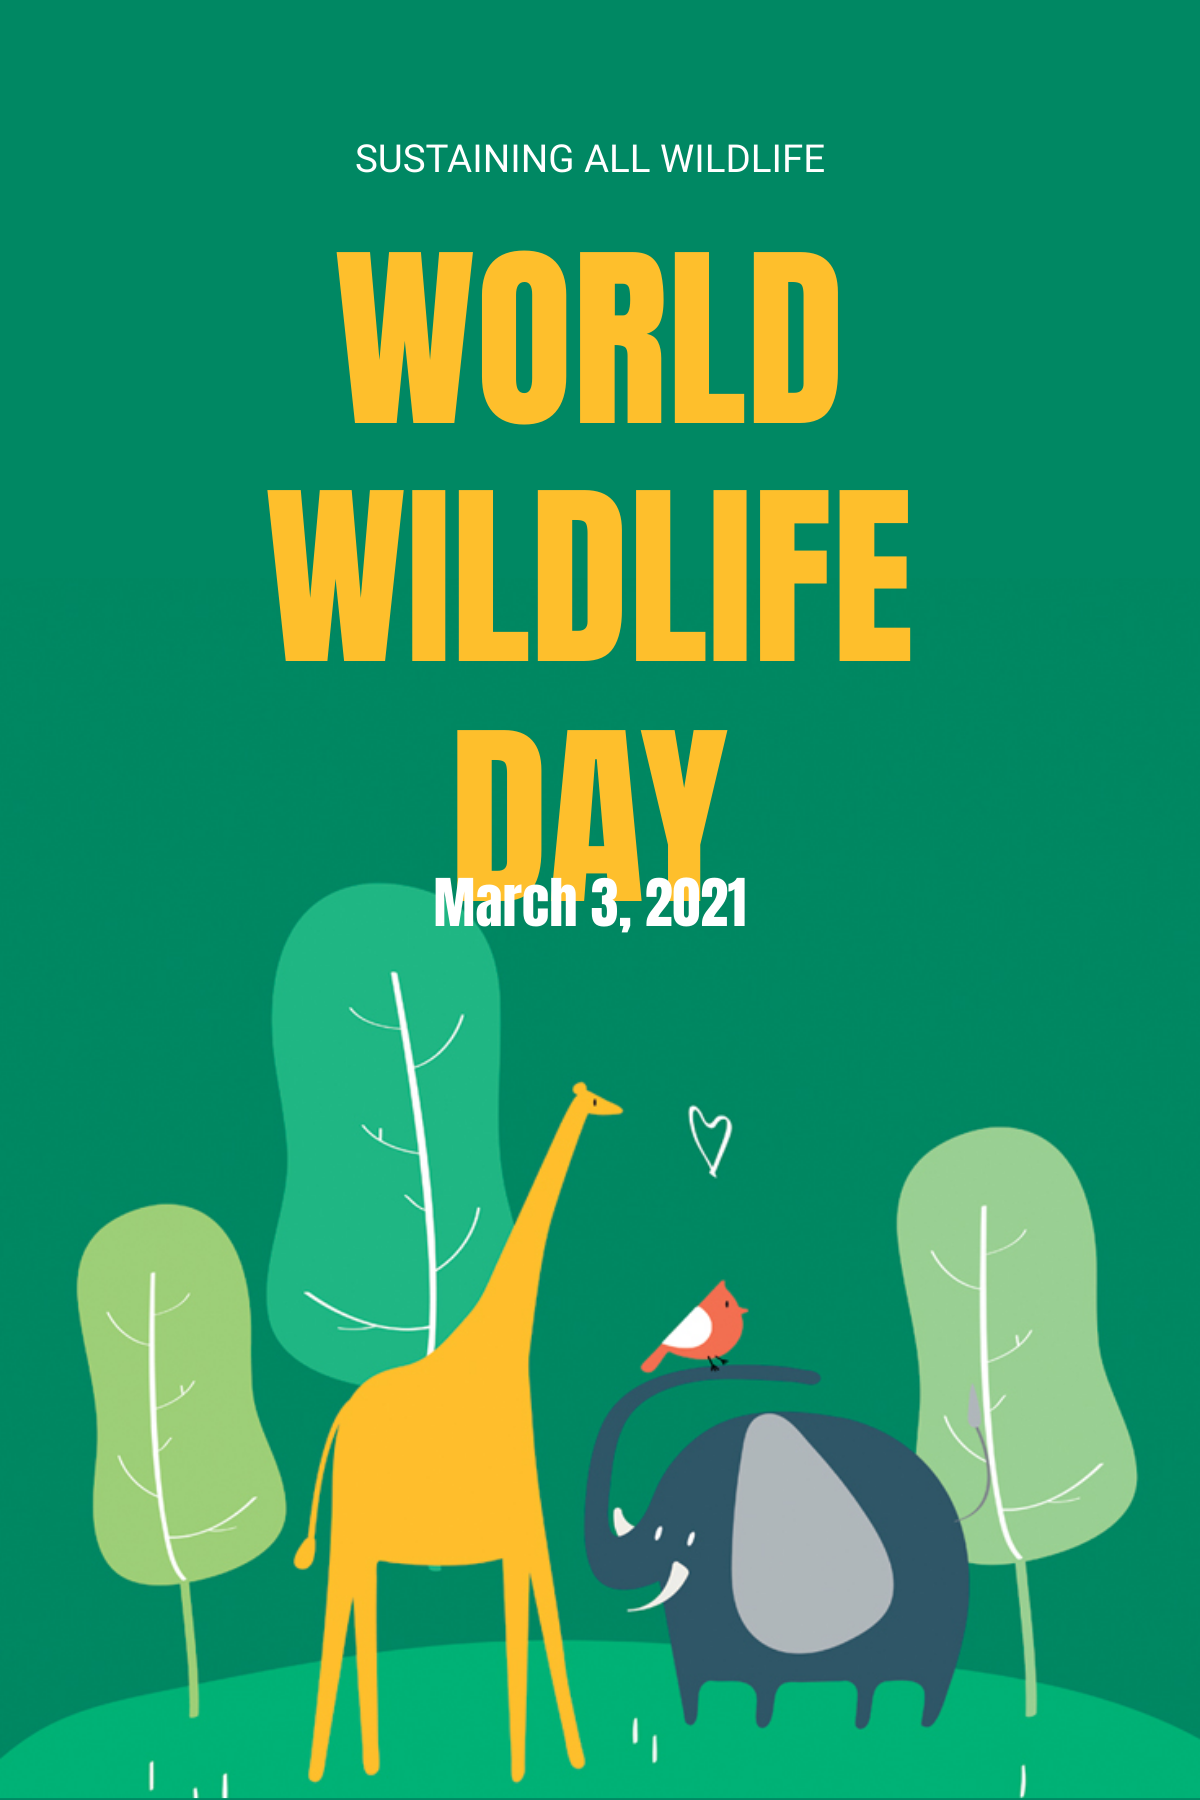 World Wild Life Day Pinterest Pin Template